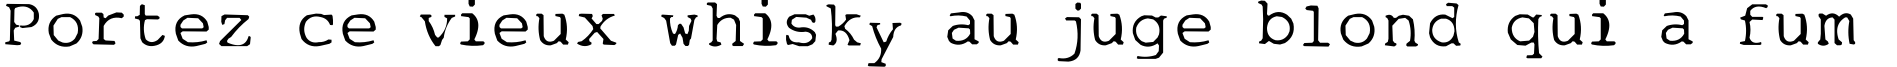 Пример написания шрифтом My type of font текста на французском